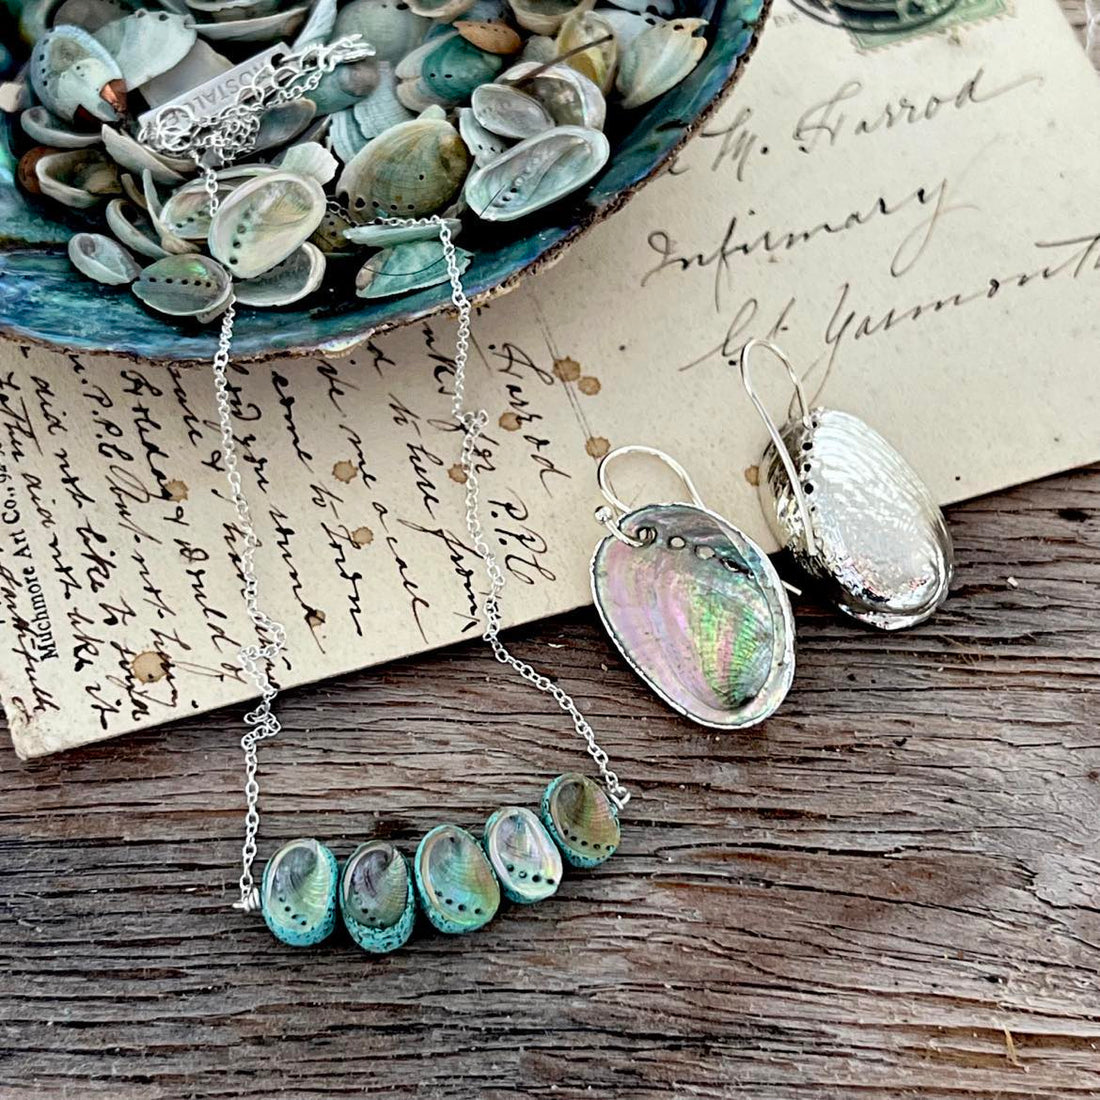 Sustainable Farmed Paua Shells: Turning Waste into Beautiful Wearable Art!